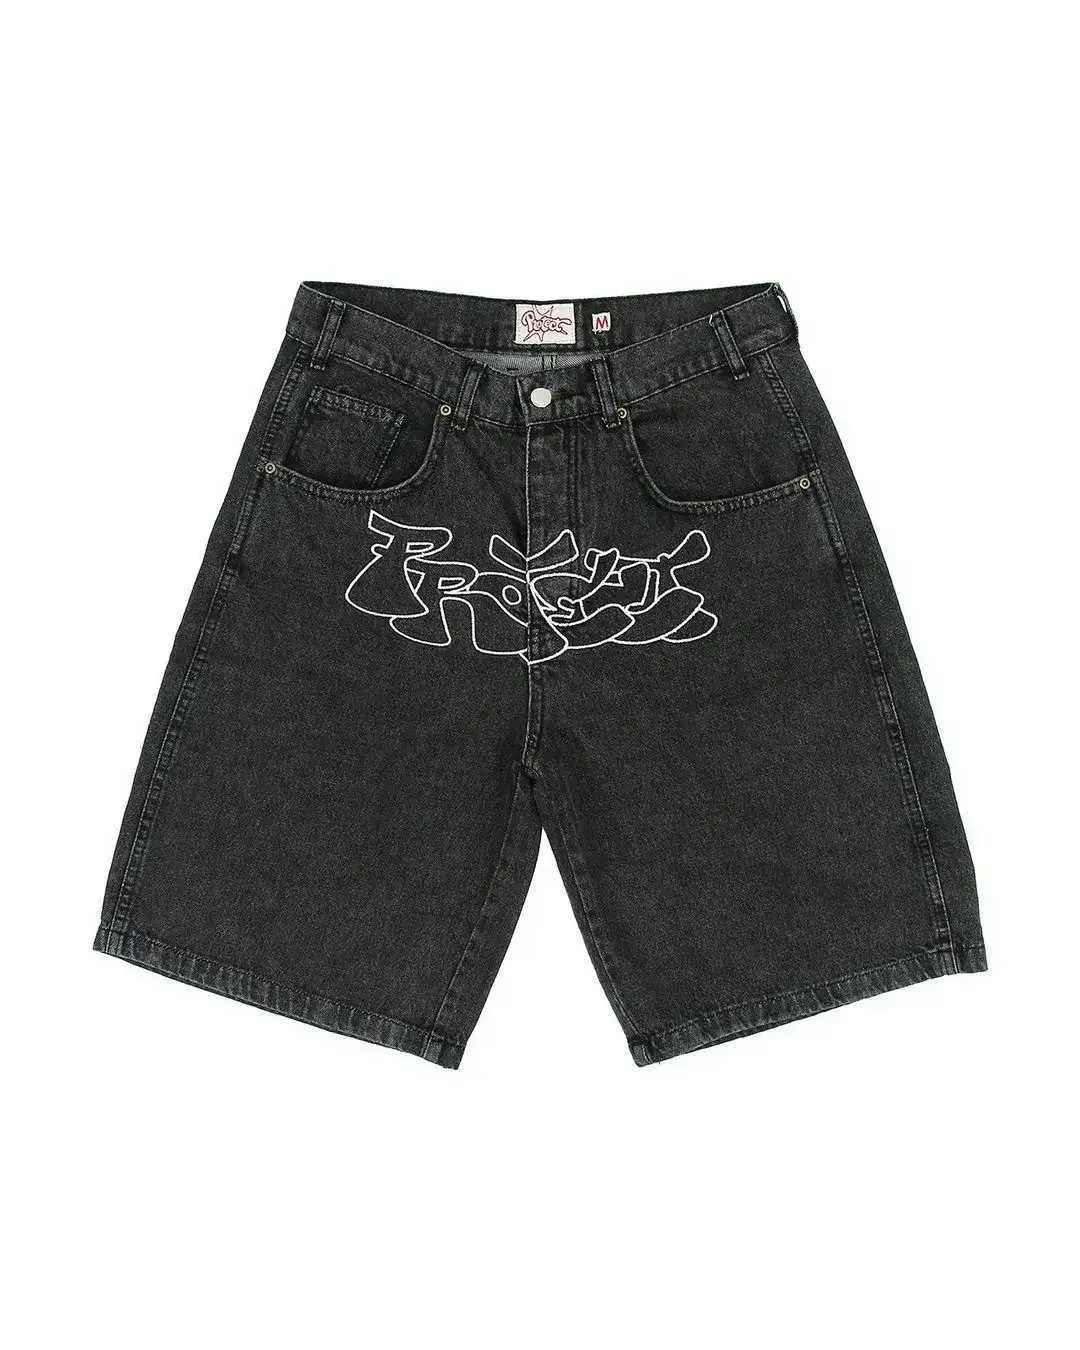 Shorts masculinos y2k shorts de hip-hop shorts de ginástica de ginástica 923 verão shin harajuku moda punk rock rock gótico masculino shortsc240402